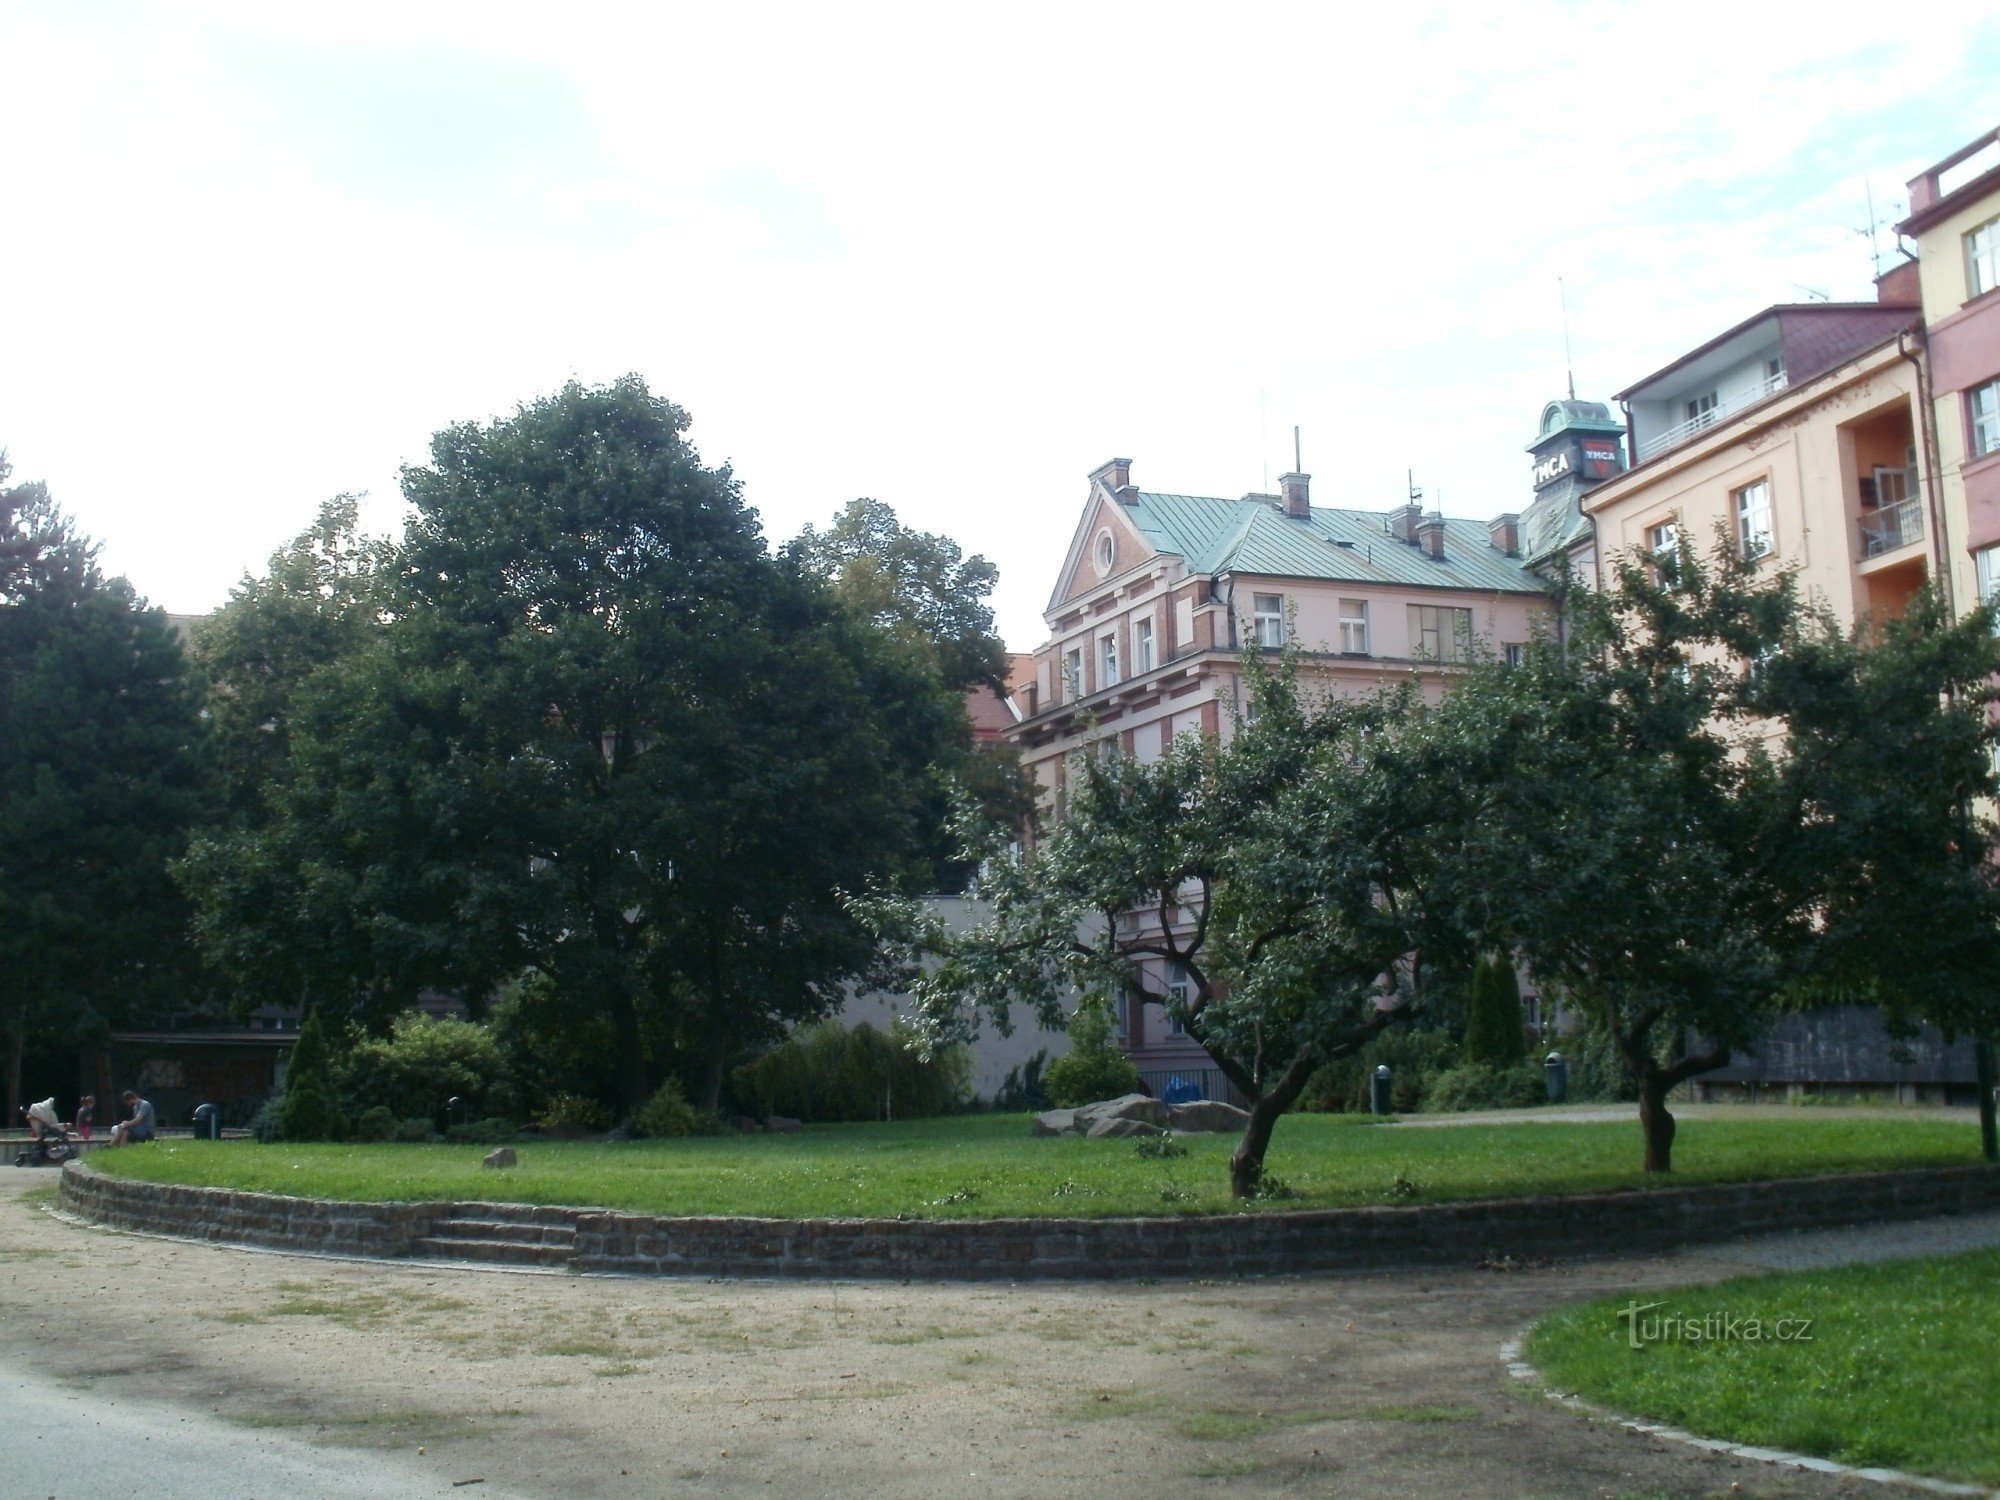 Hradec Králové - fairy tale park